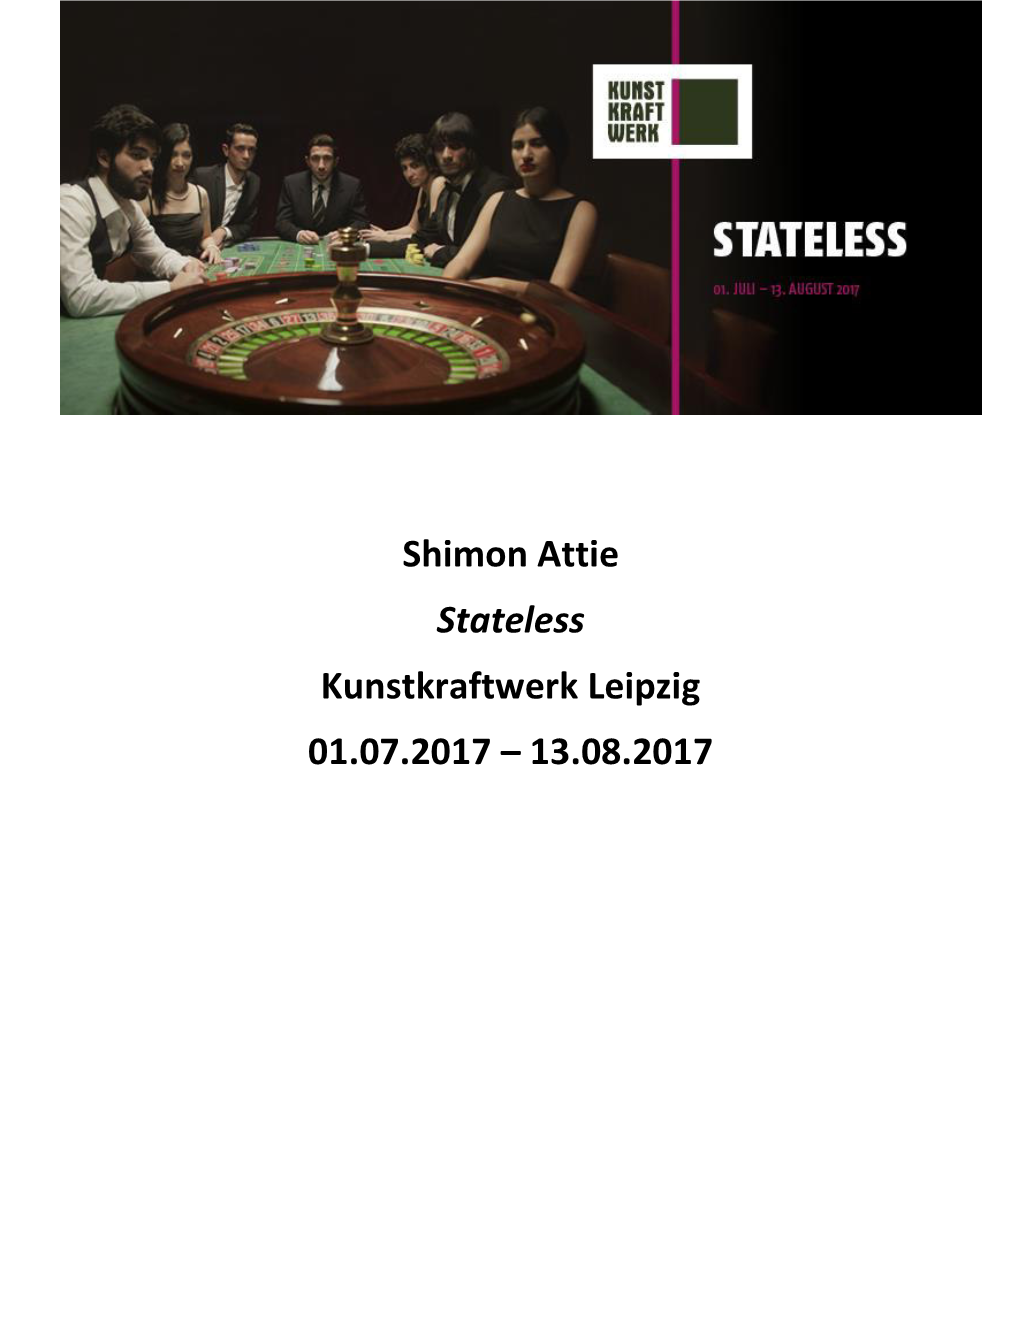 Shimon Attie Stateless Kunstkraftwerk Leipzig 01.07.2017 – 13.08.2017